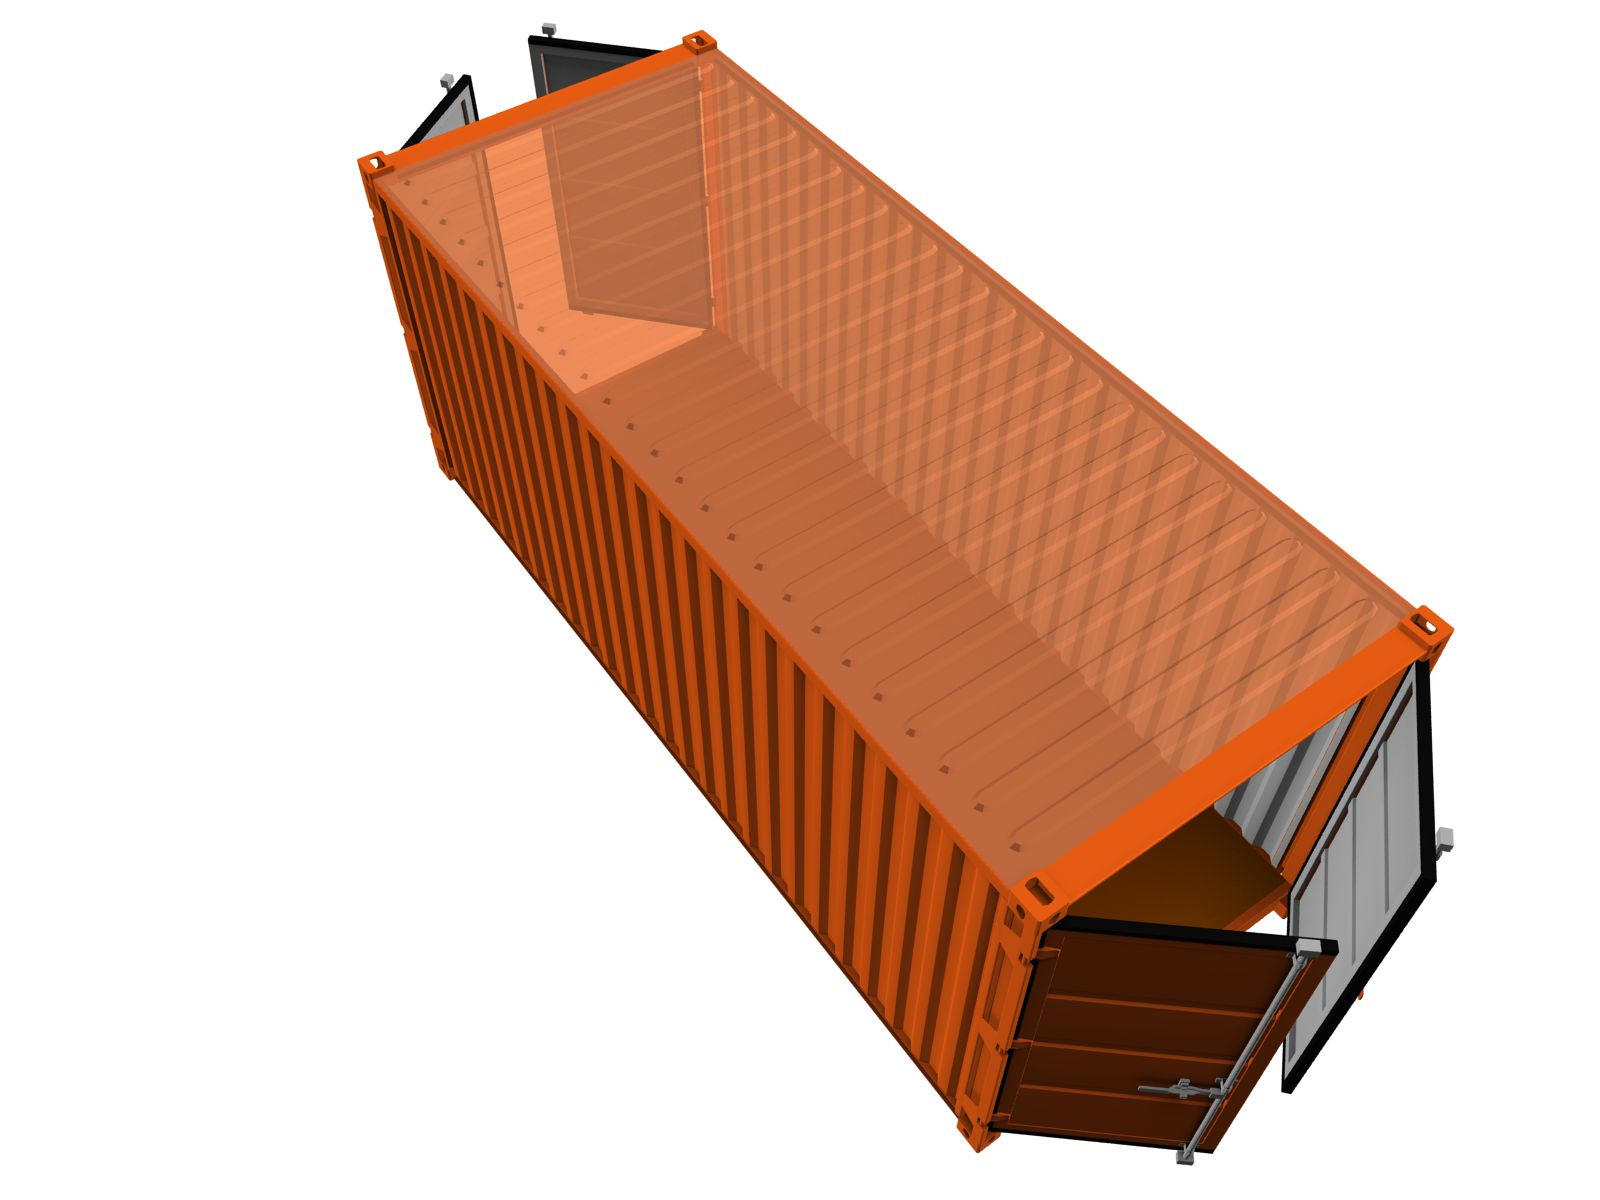 Skladový kontejner s druhými dvoukřídlými dveřmi